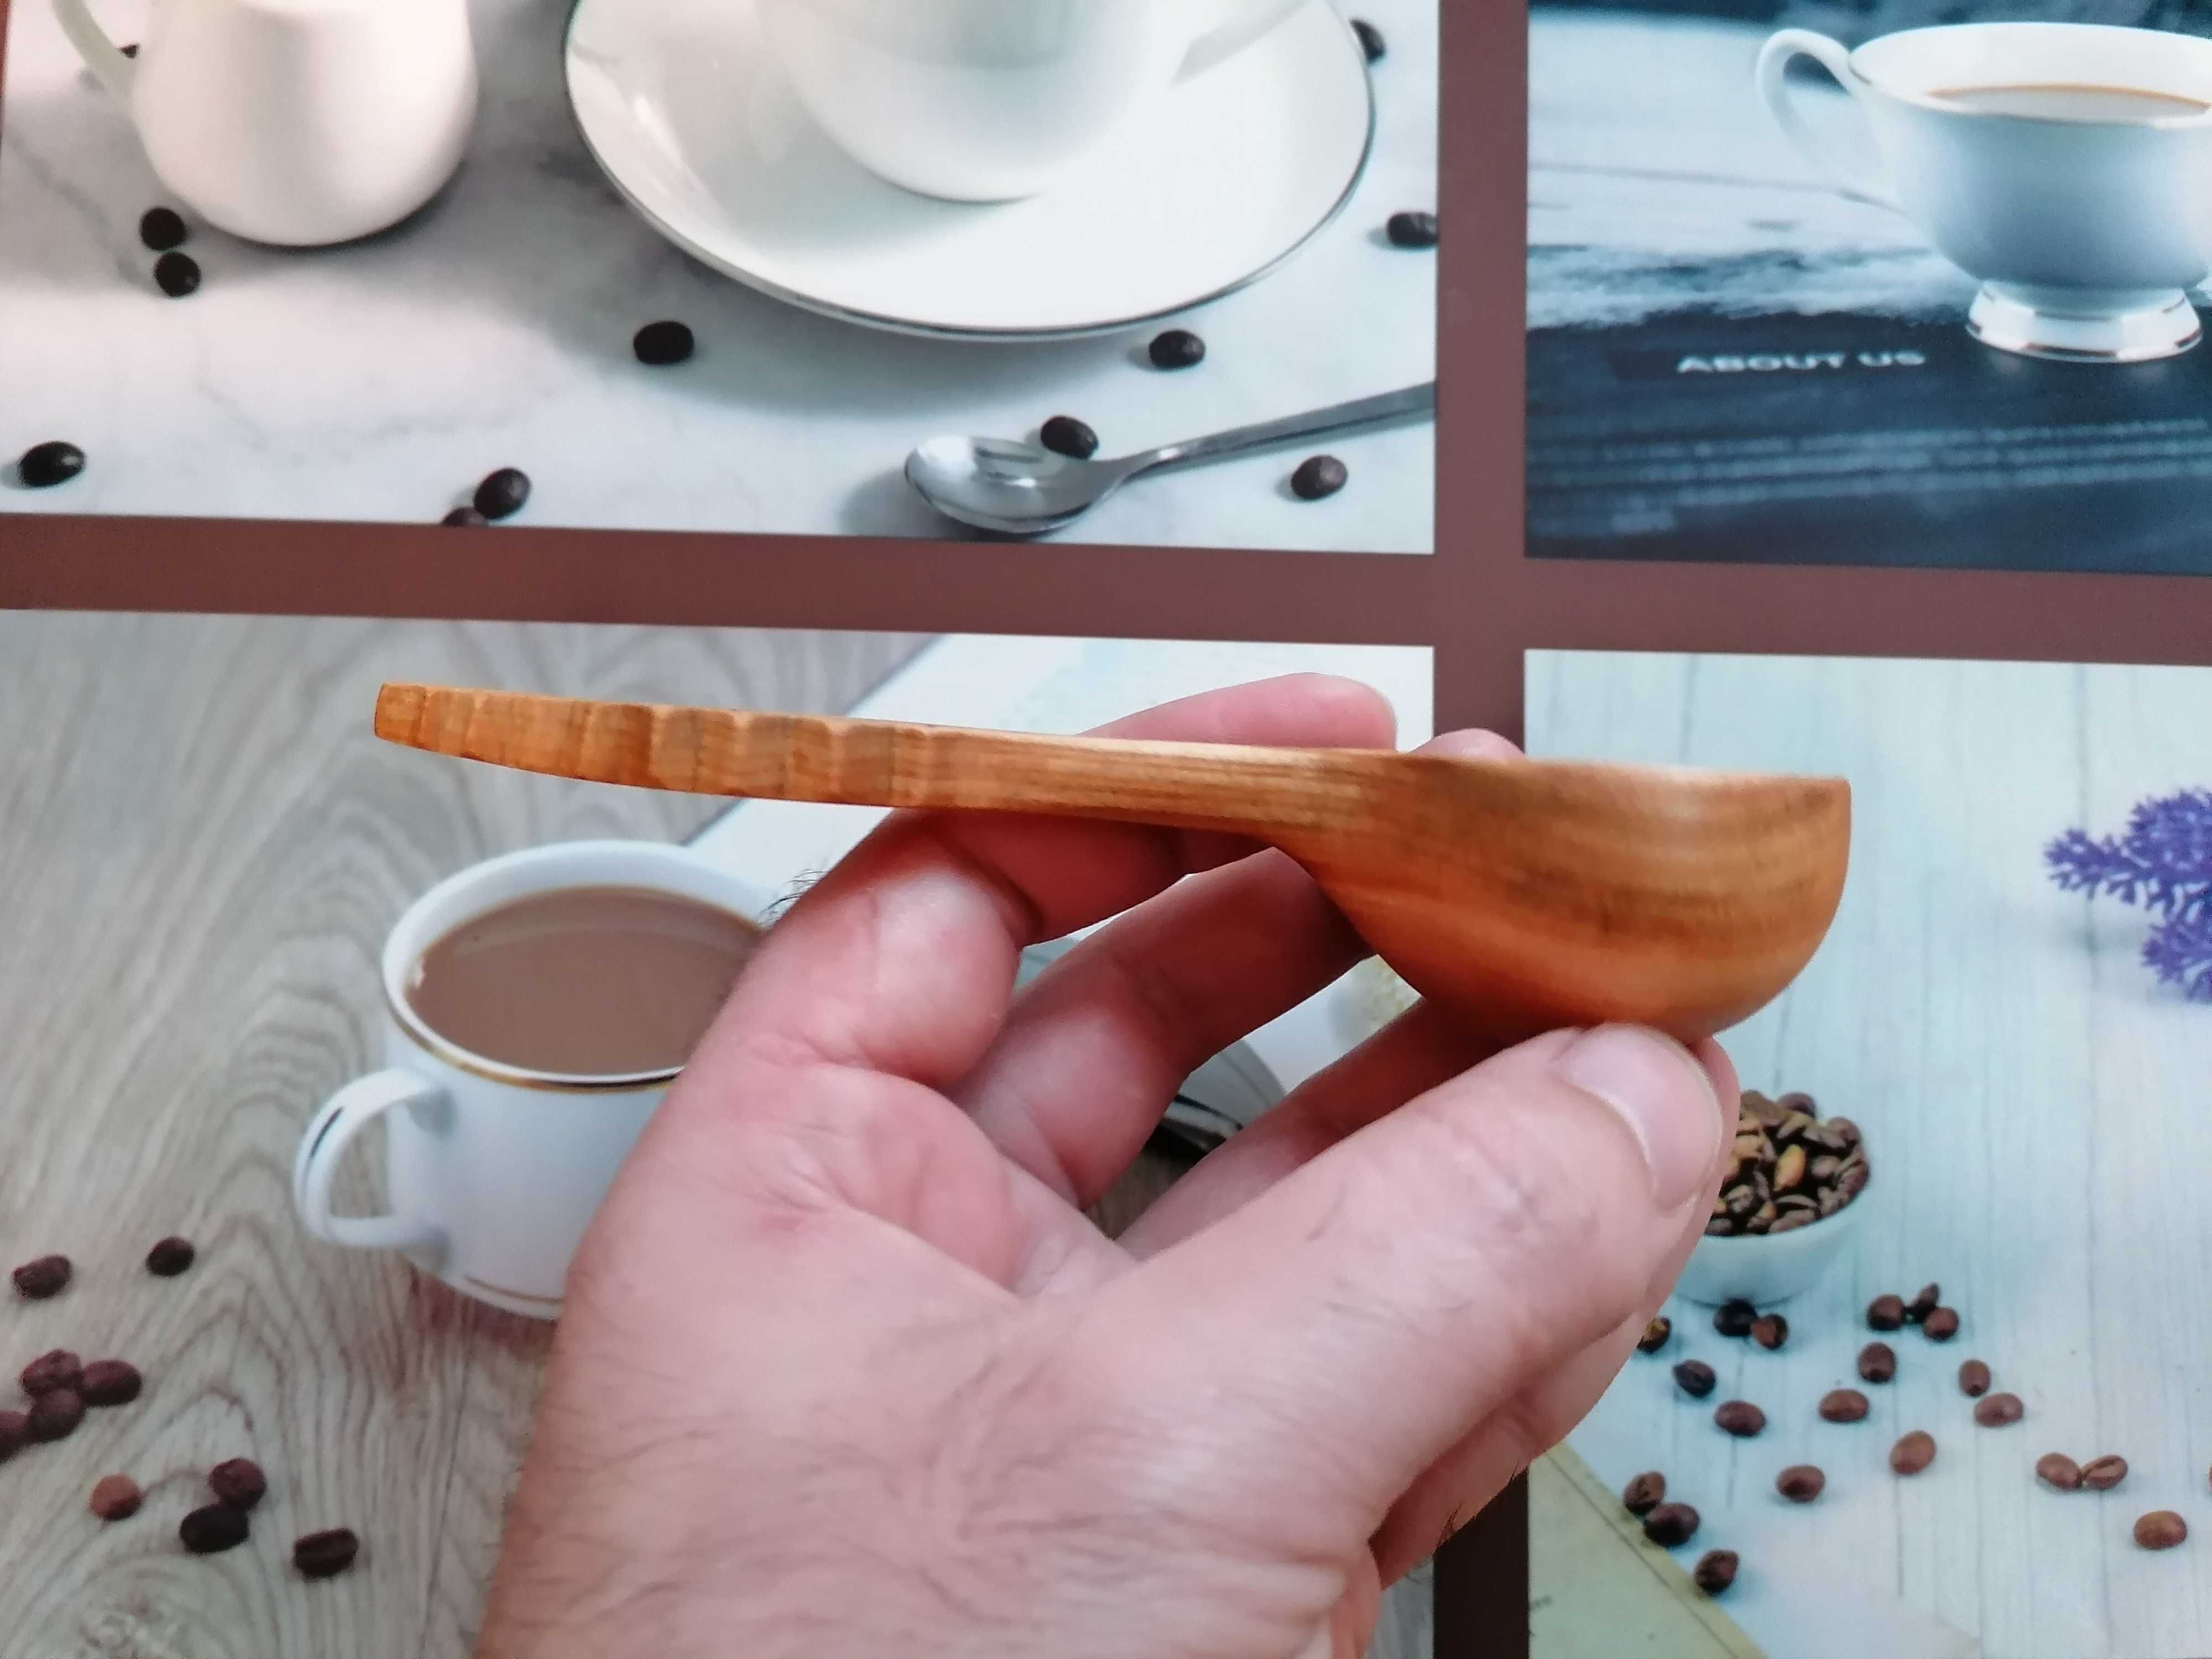 Lingura dozaj cafea sculptata manual din lemn de cires.